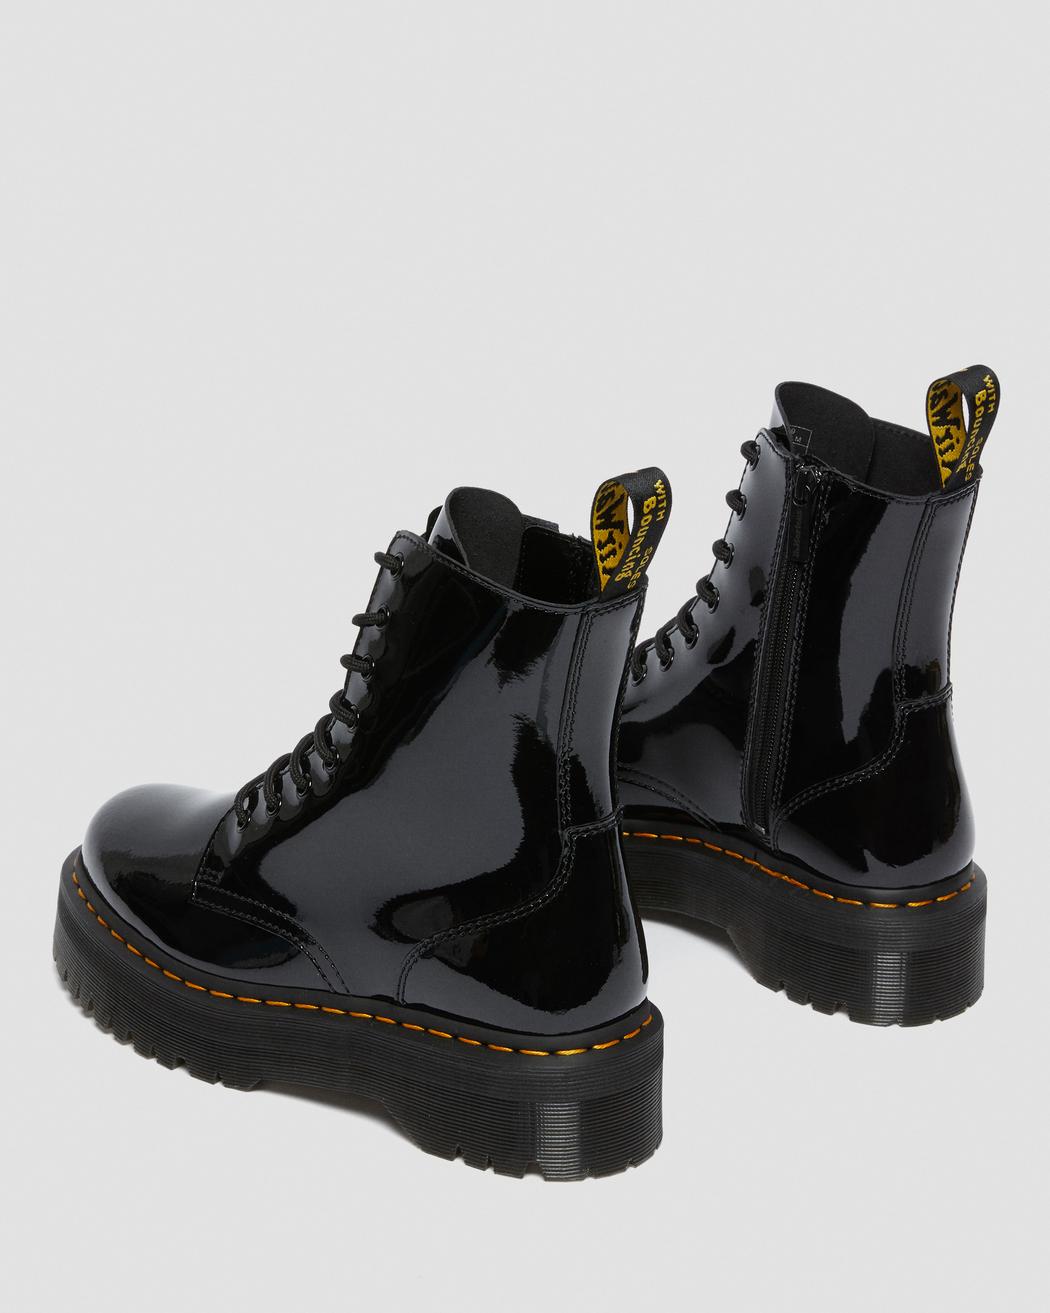 Jadon Black Patent Leather Platform Boots DM26646001 - 3